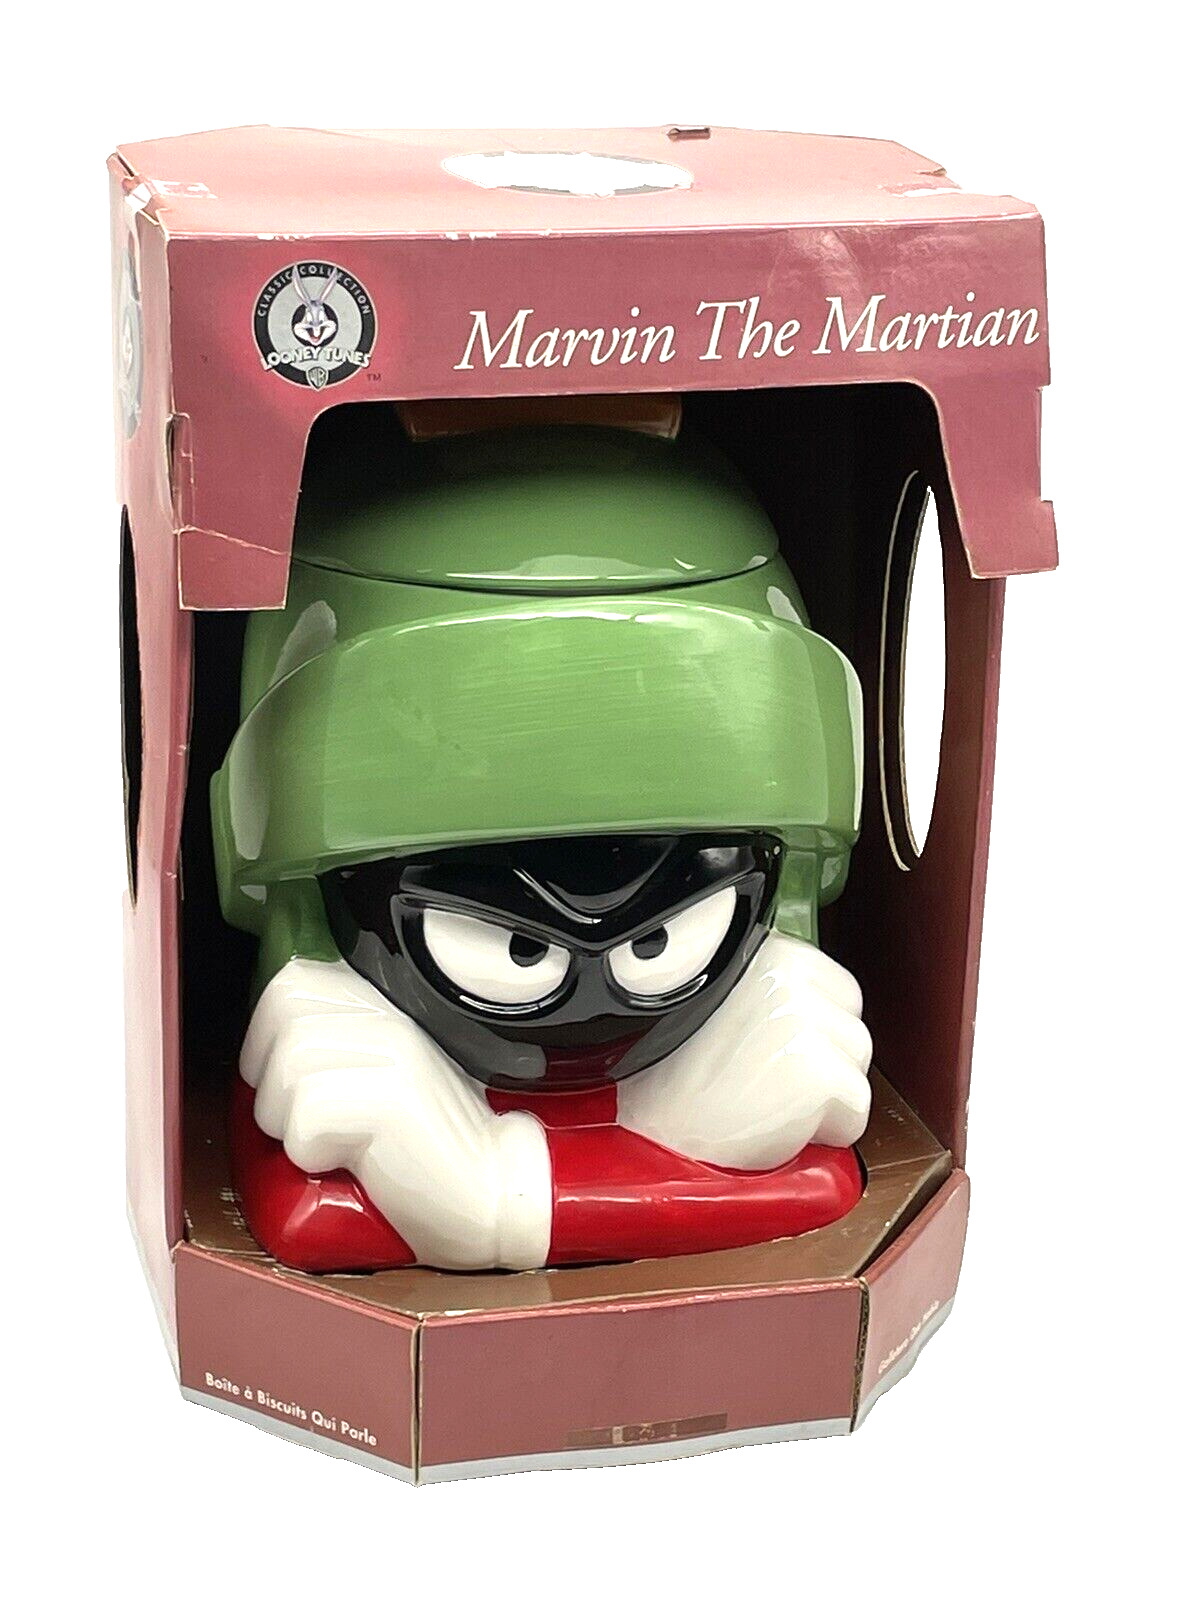 RARE Vintage Marvin The Martian Looney Tunes Cookie Jar in Original Box 2001